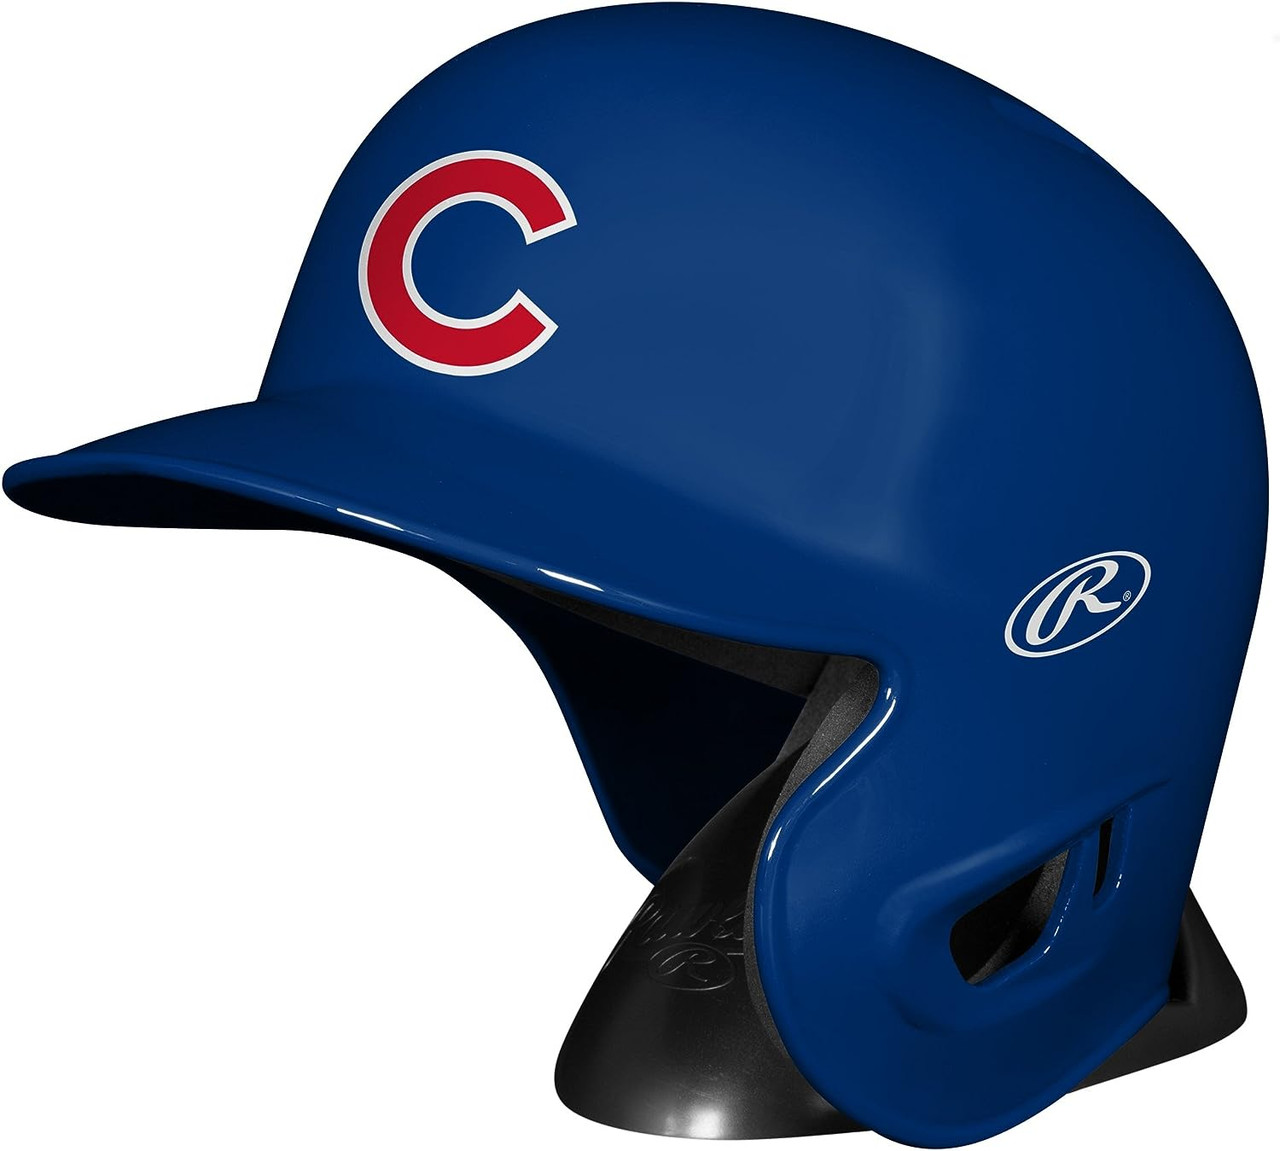 Rawlings Chicago Cubs Mini Replica Helmet